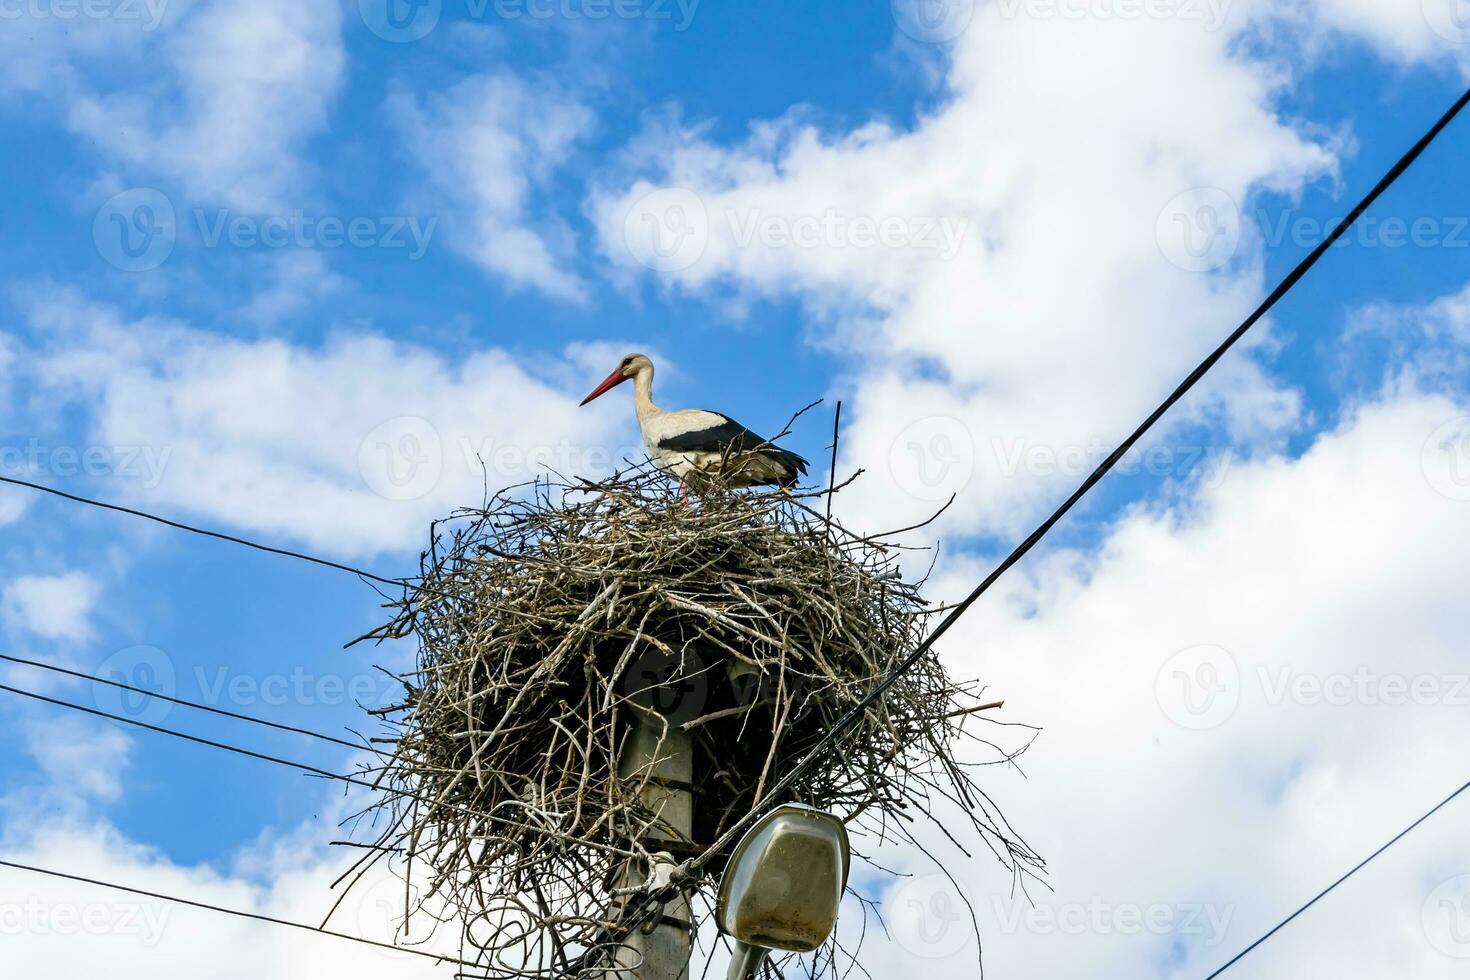 mooi vleugel ooievaar in houten stok nest Aan straat lamp foto